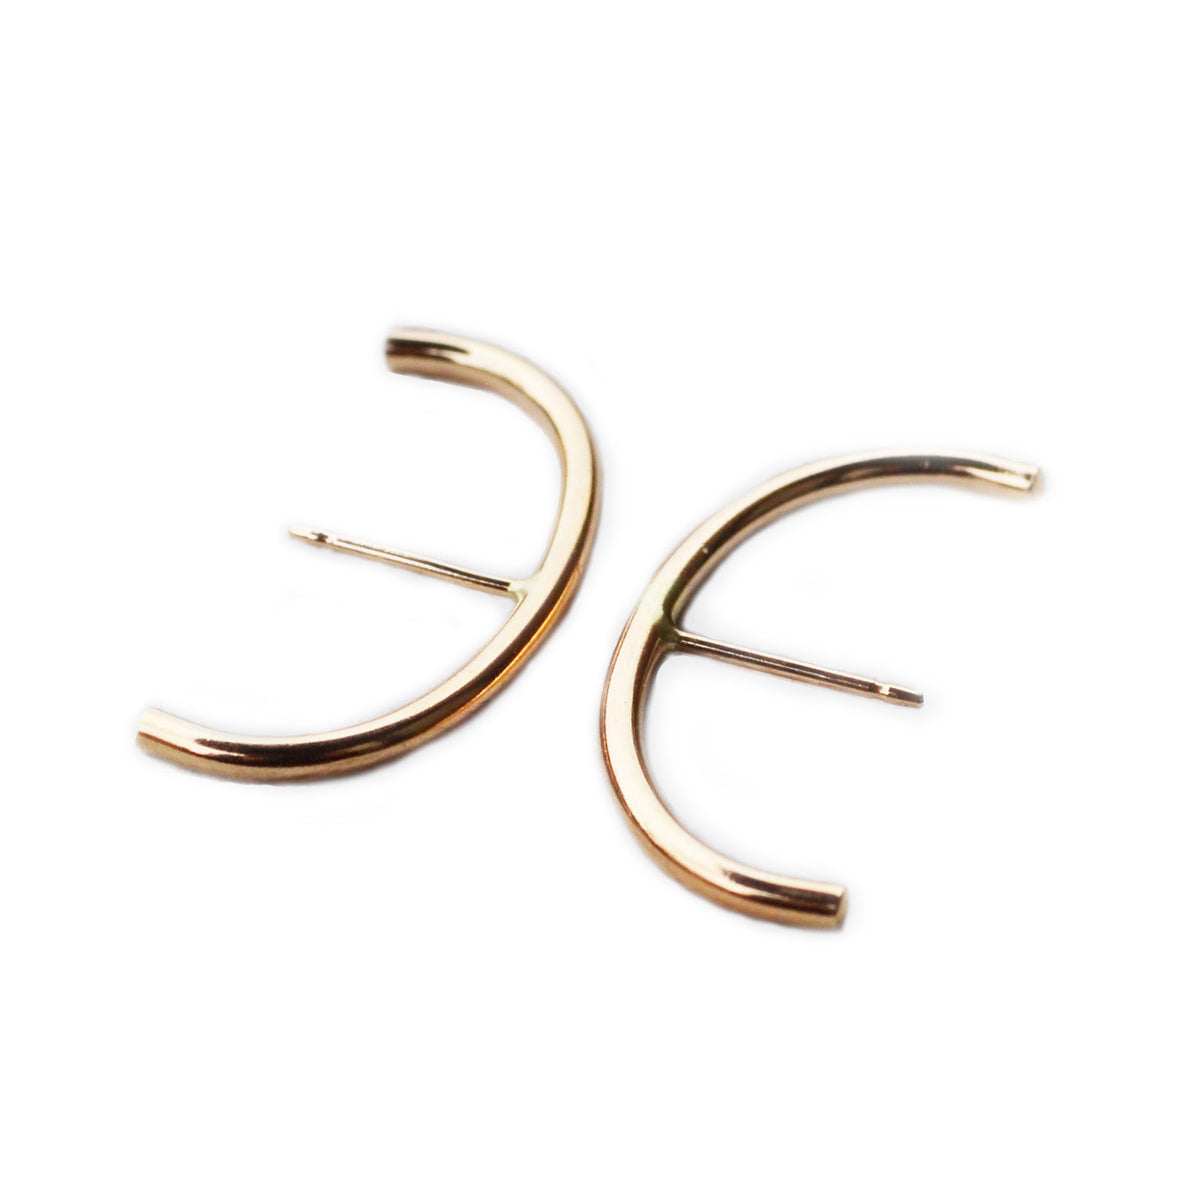 Minimalist Ear Suspension Hoop, Gold, Rose Gold, or Silver